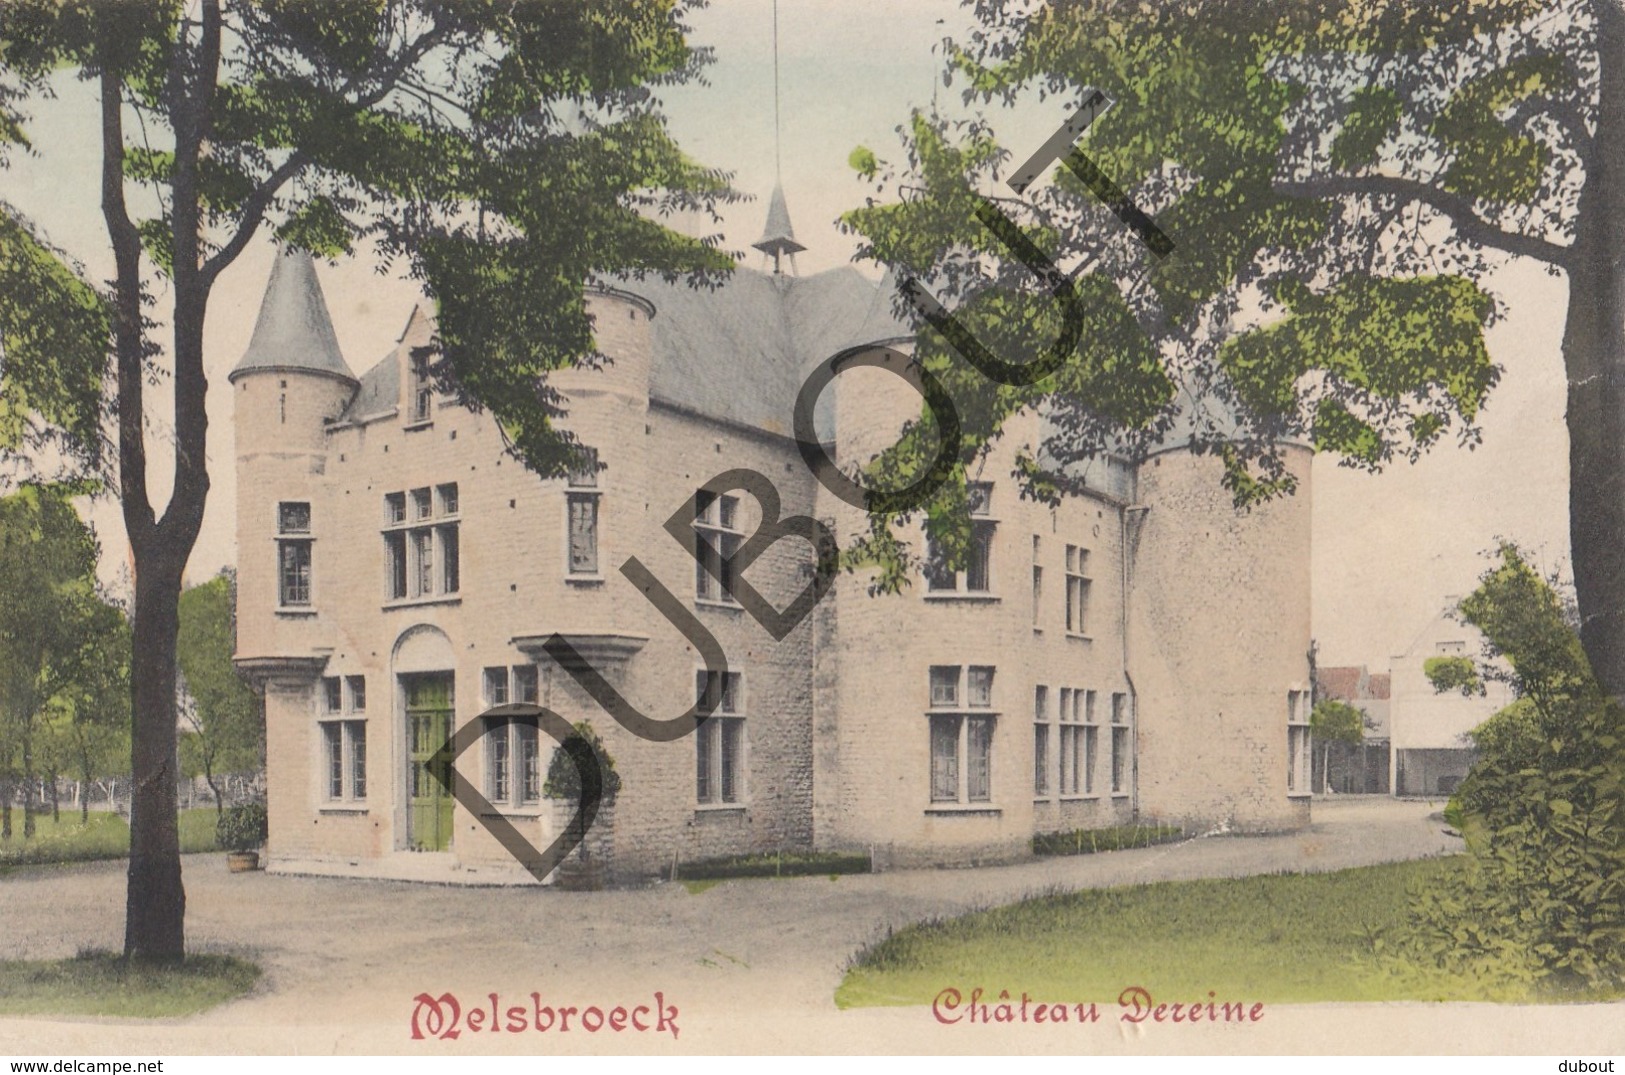 Postkaart - Carte Postale Château Dereine MELSBROEK - Kleur  (o734) - Steenokkerzeel